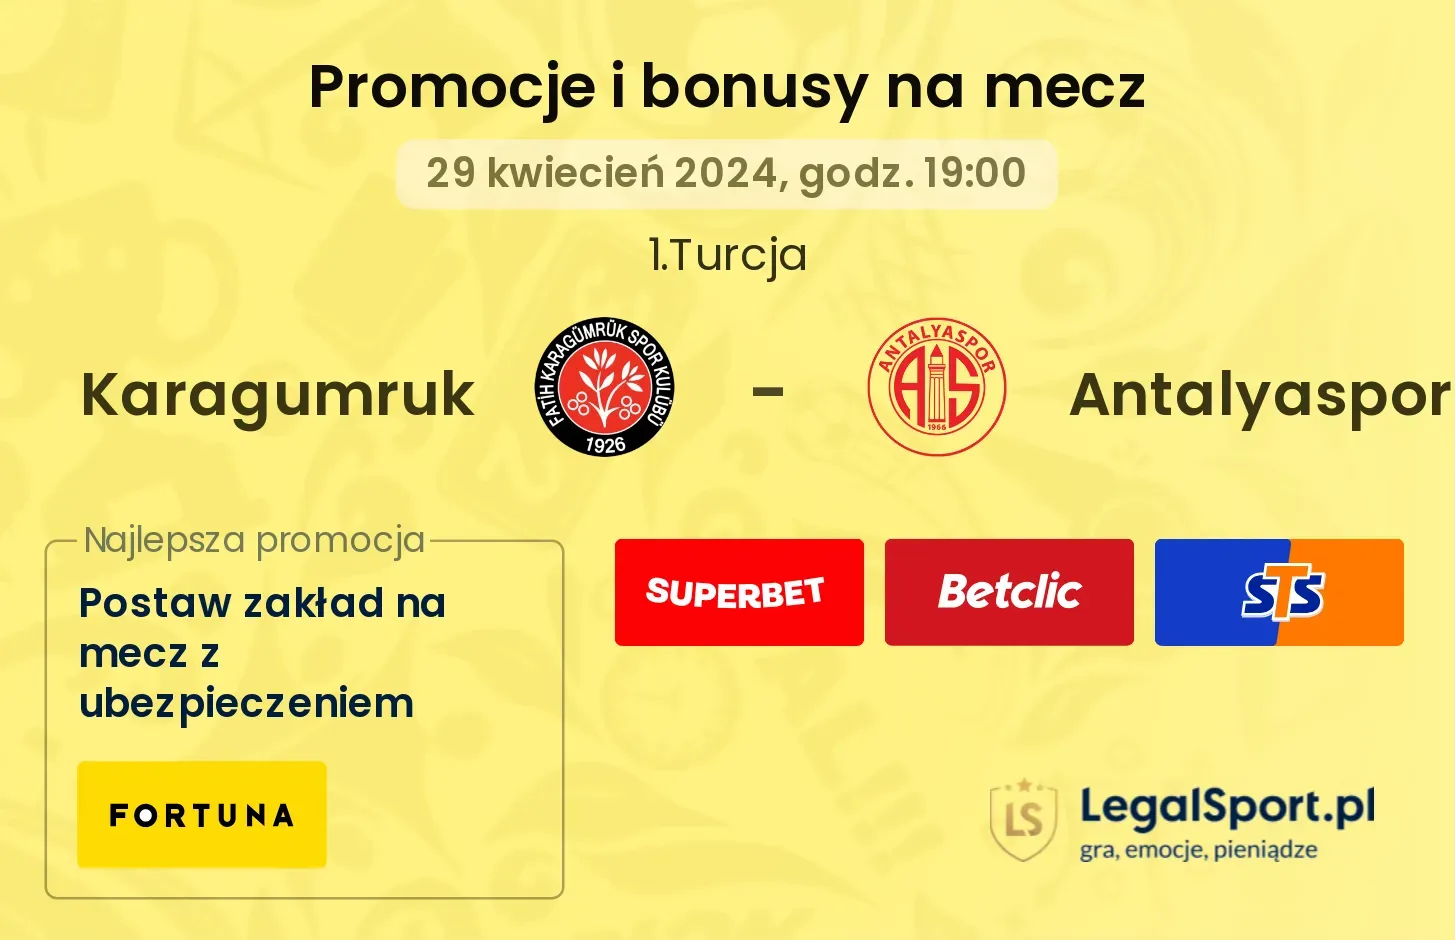 Karagumruk - Antalyaspor promocje bonusy na mecz